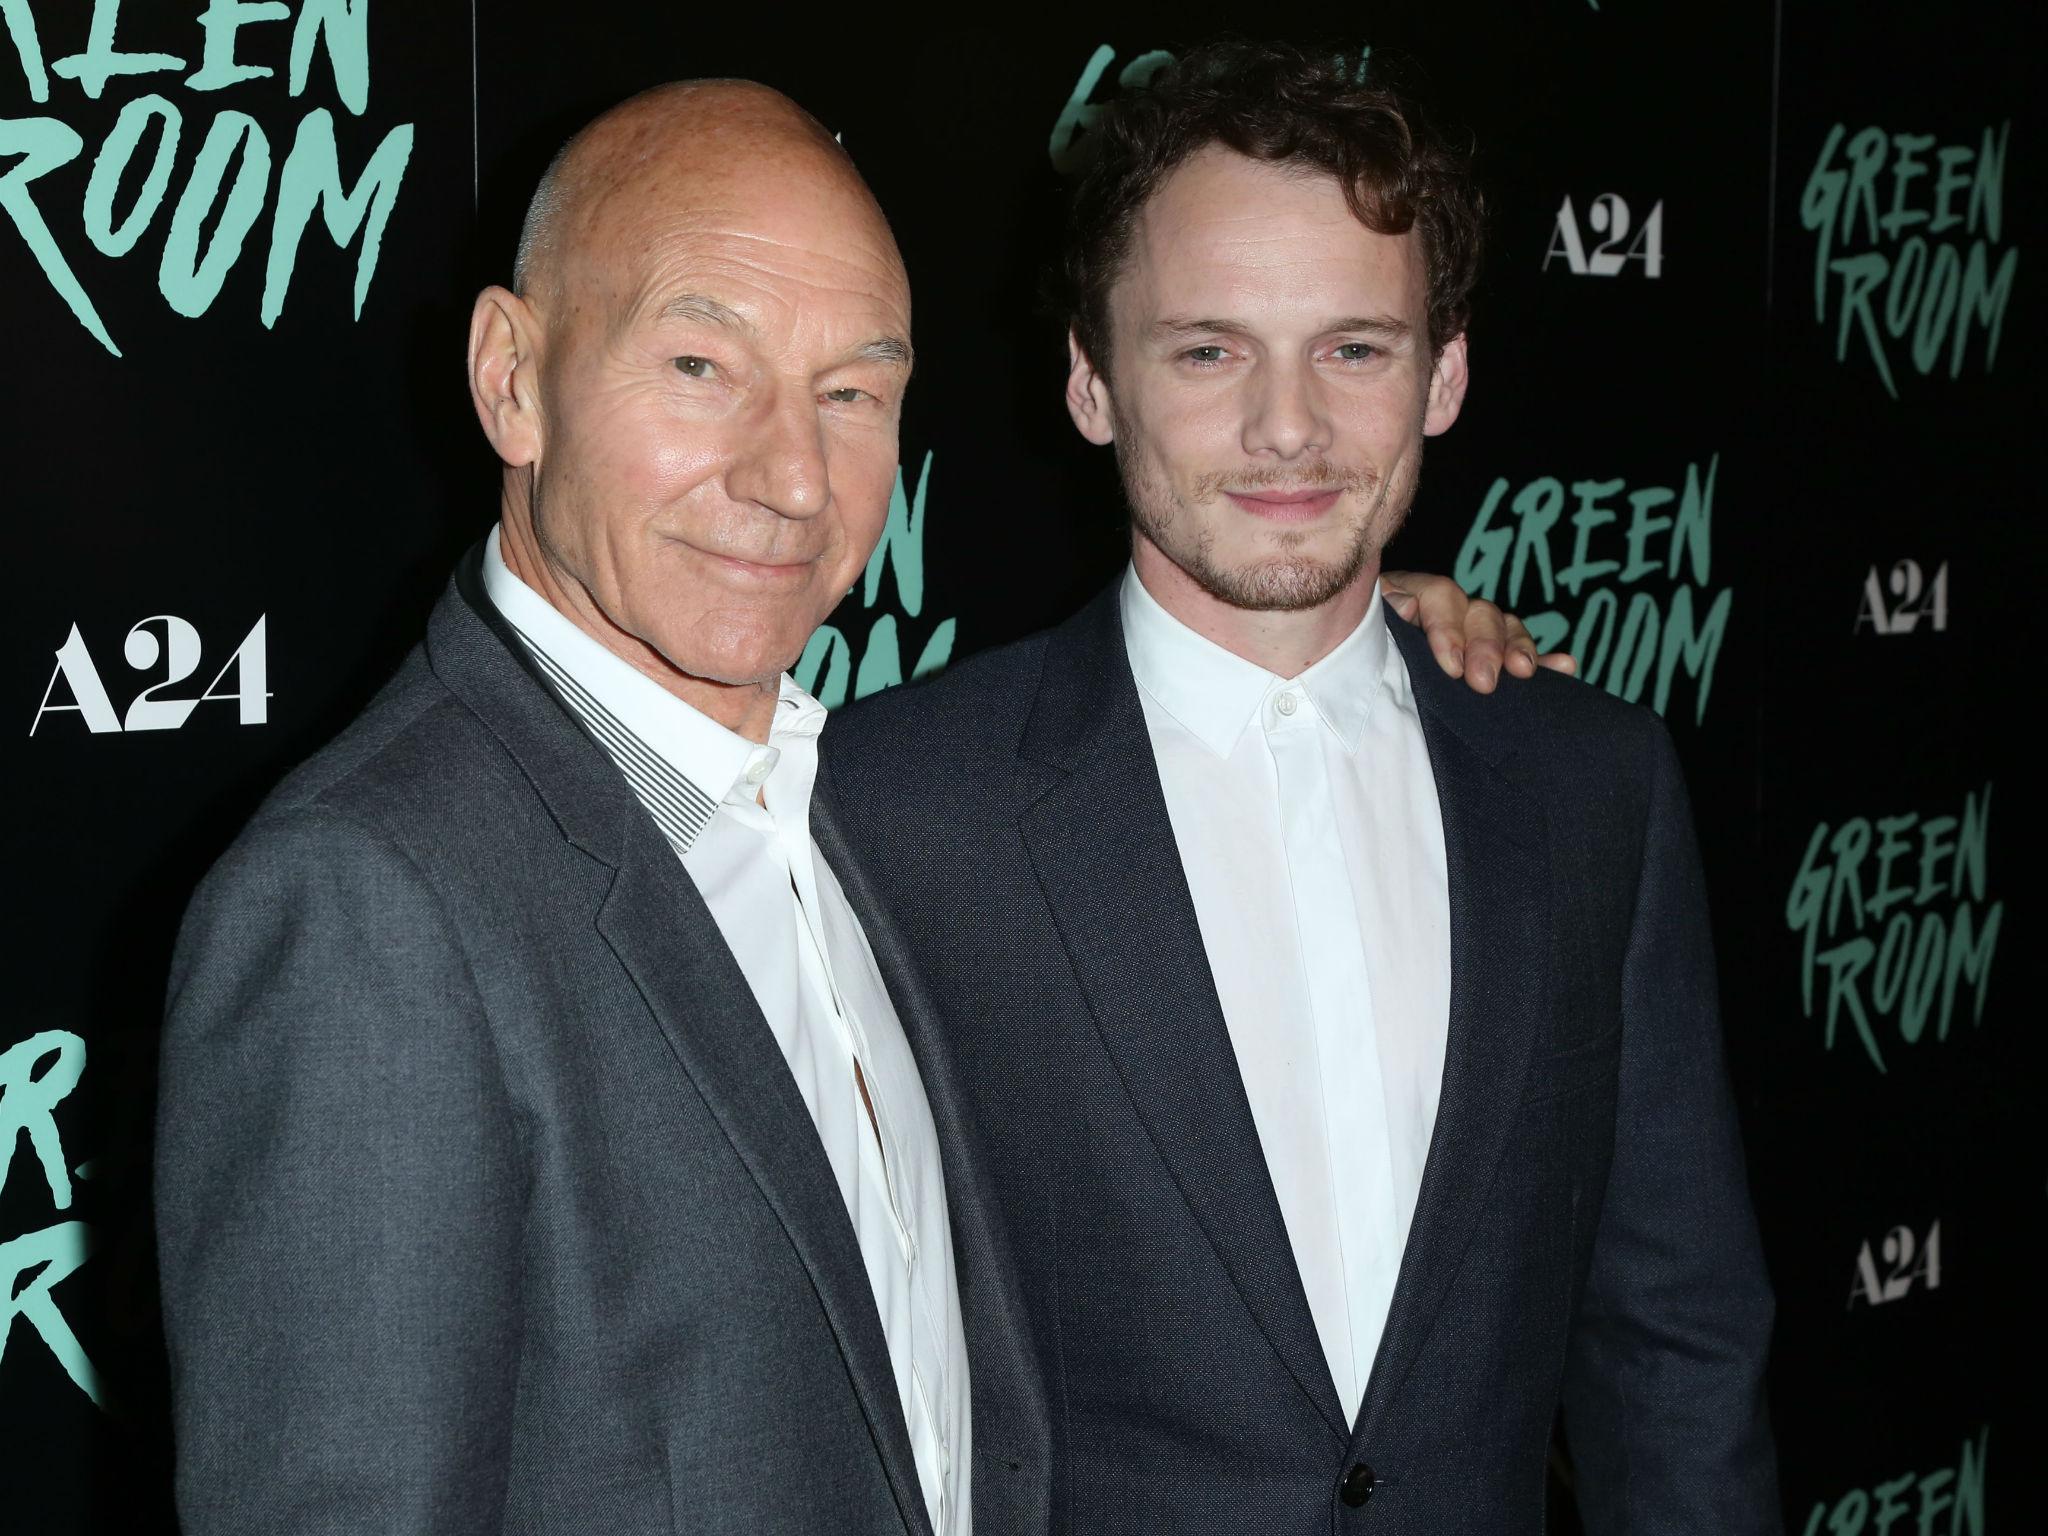 Co-stars Anton Yelchin (right) and Patrick Stewart at a Los Angeles screening of the film ‘Green Room’ (David Buchan/Variety/Rex/Shutterstock)